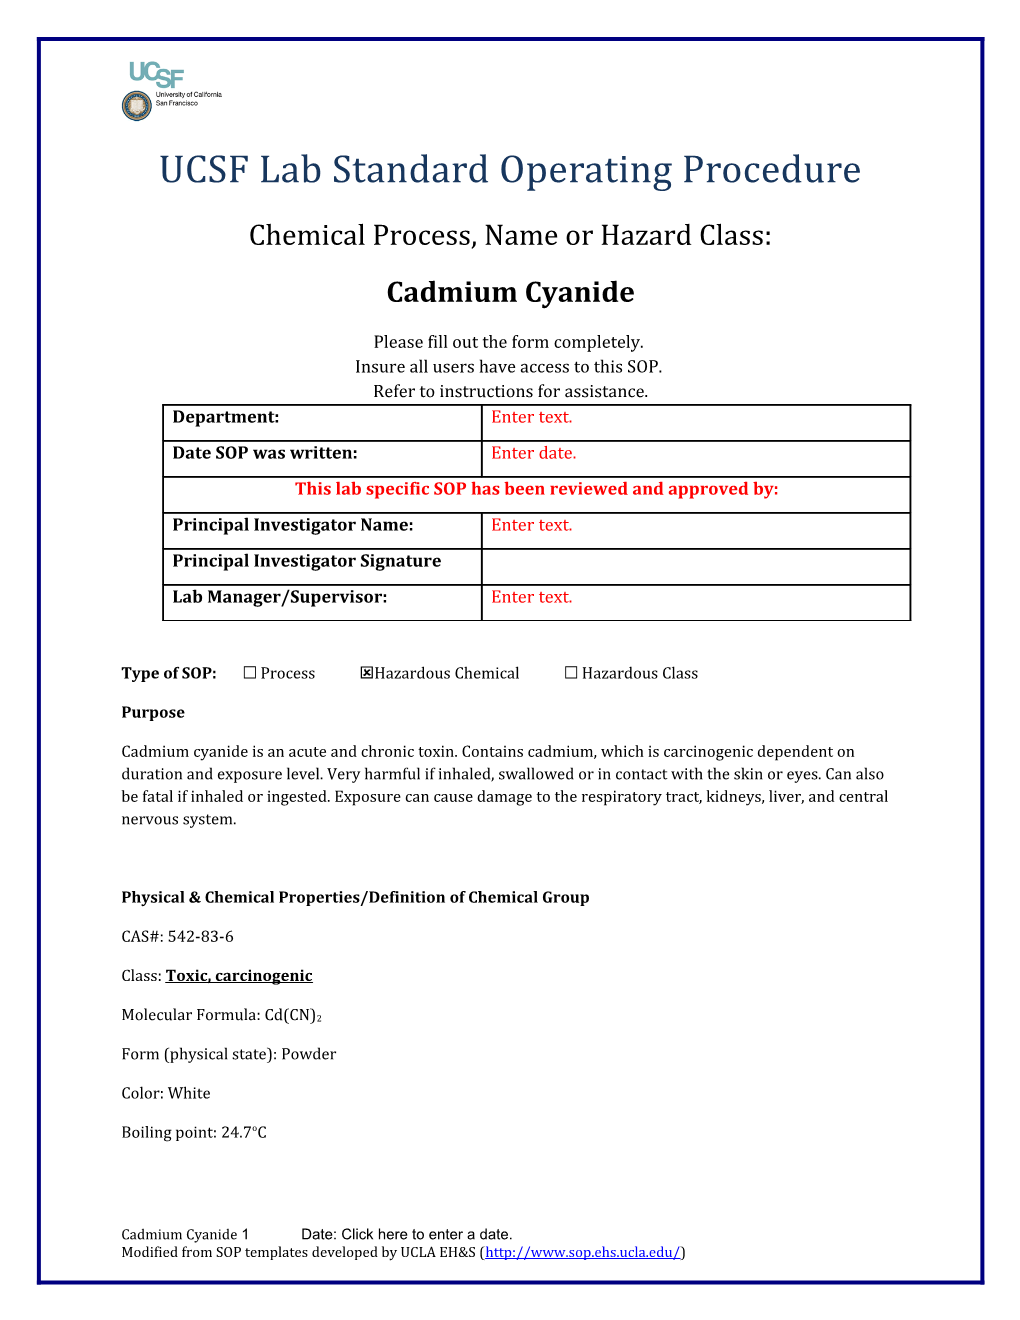 UCSF Lab Standard Operating Procedure s2